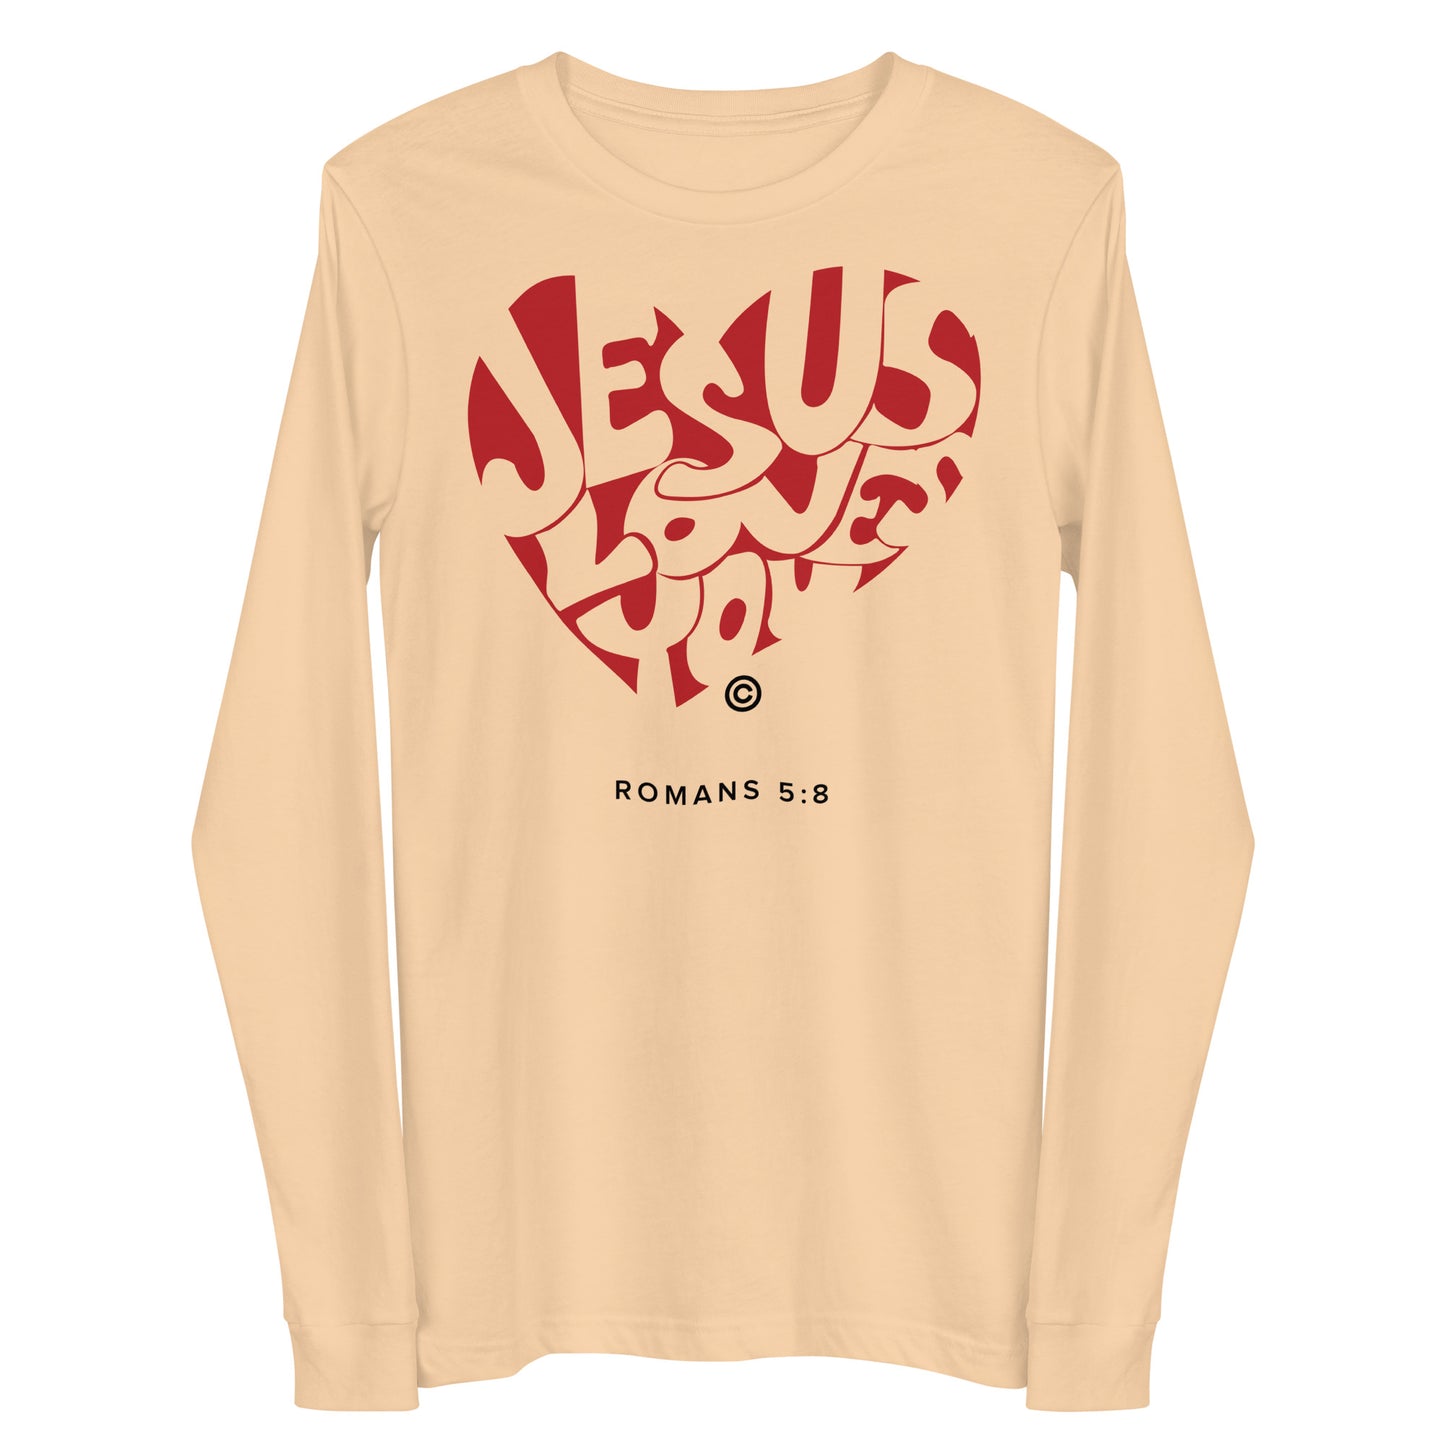 Jesus Loves You Women's Long Sleeve Tee